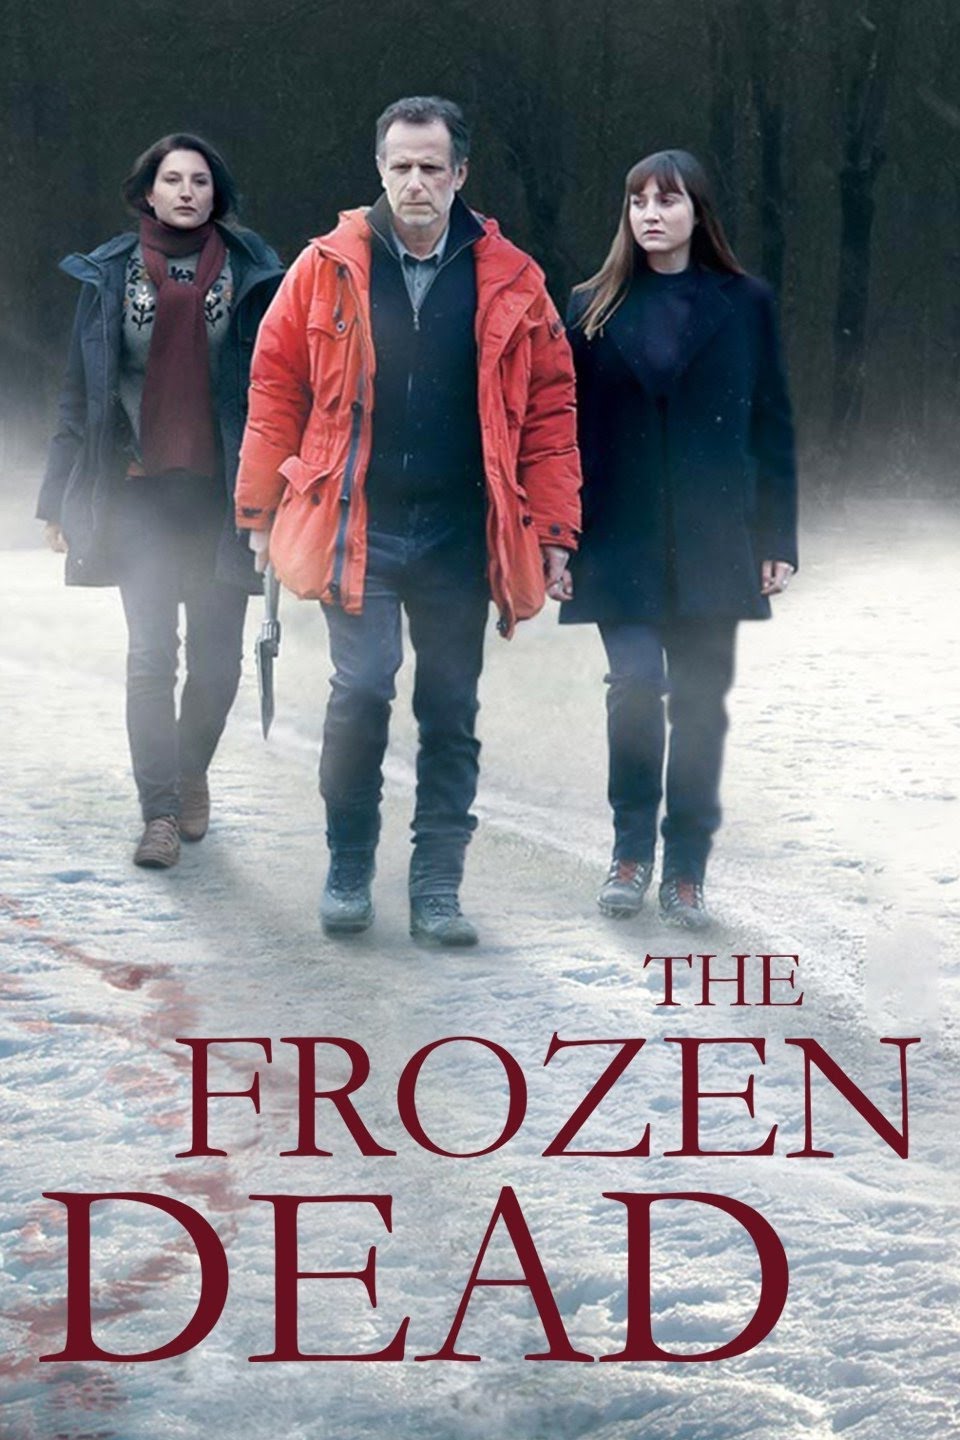 the frozen dead movie review